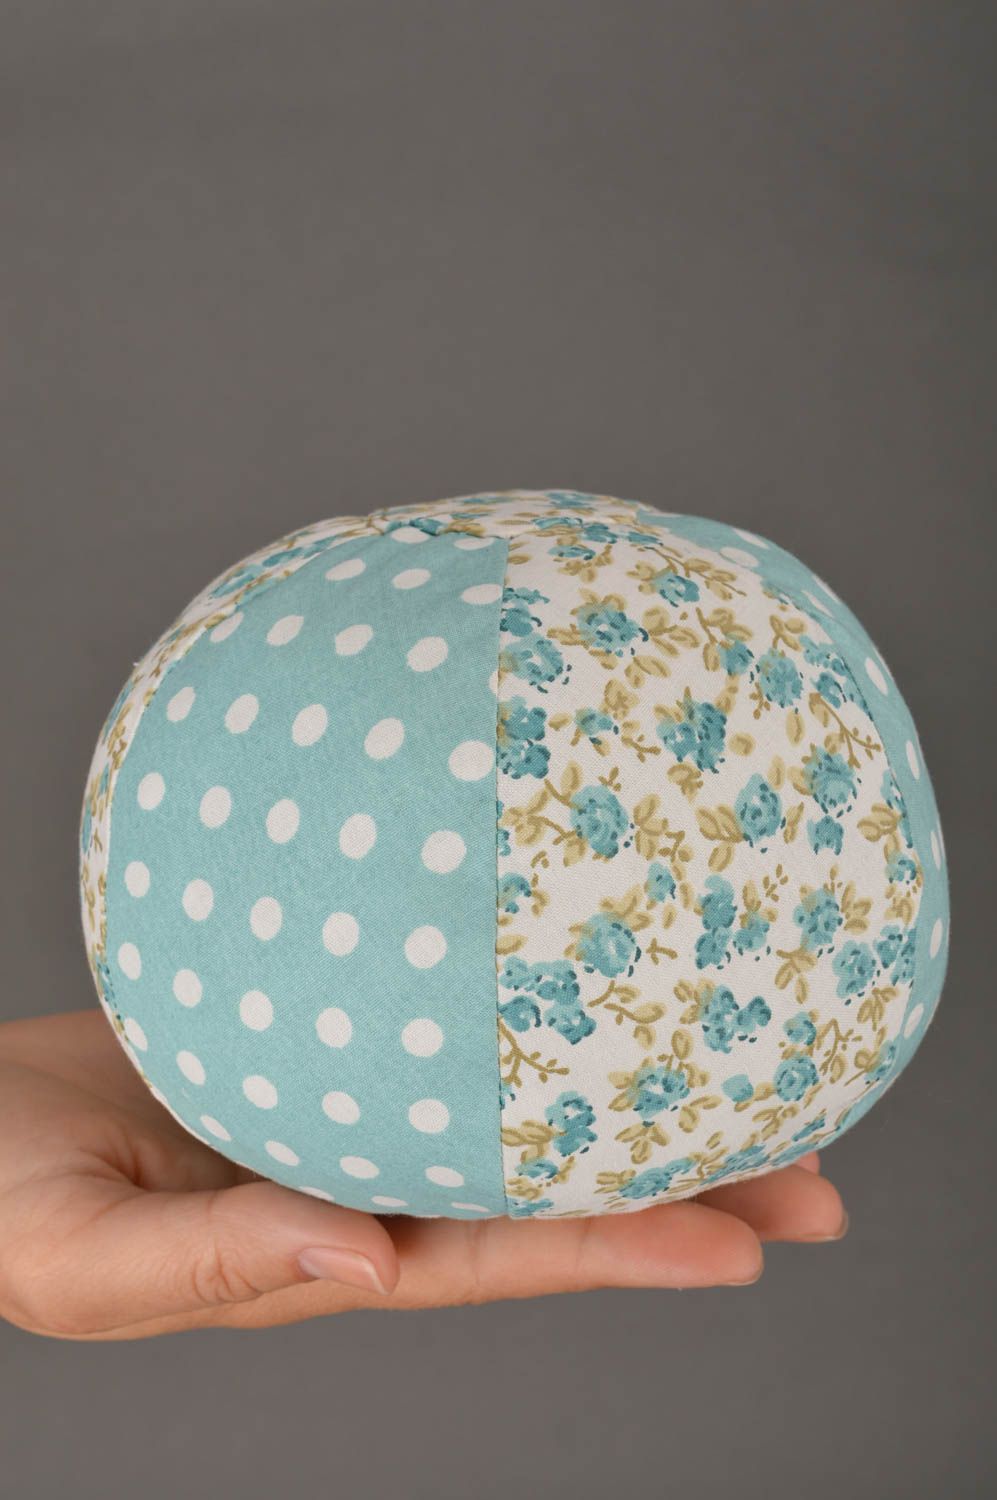 Blue soft handmade fabric toy ball for children handmade nursery decor ideas photo 3